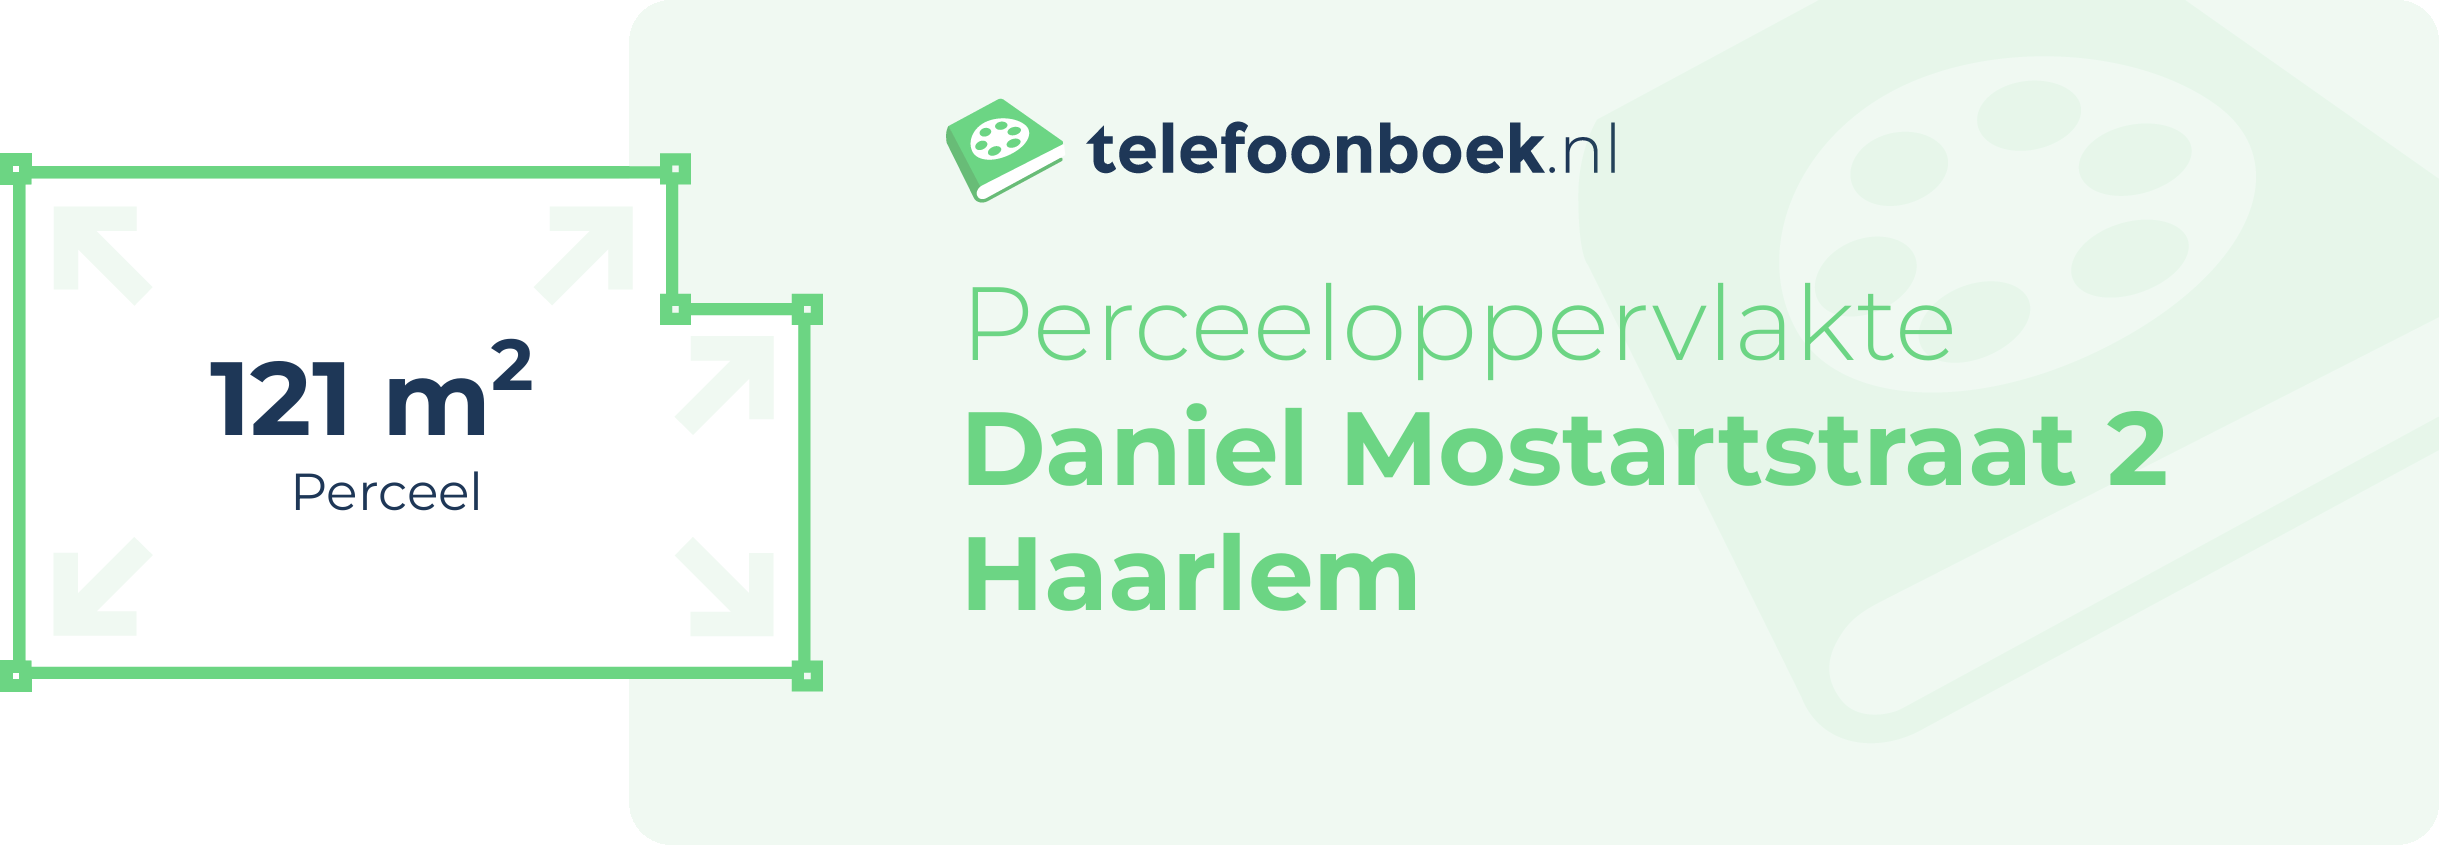 Perceeloppervlakte Daniel Mostartstraat 2 Haarlem